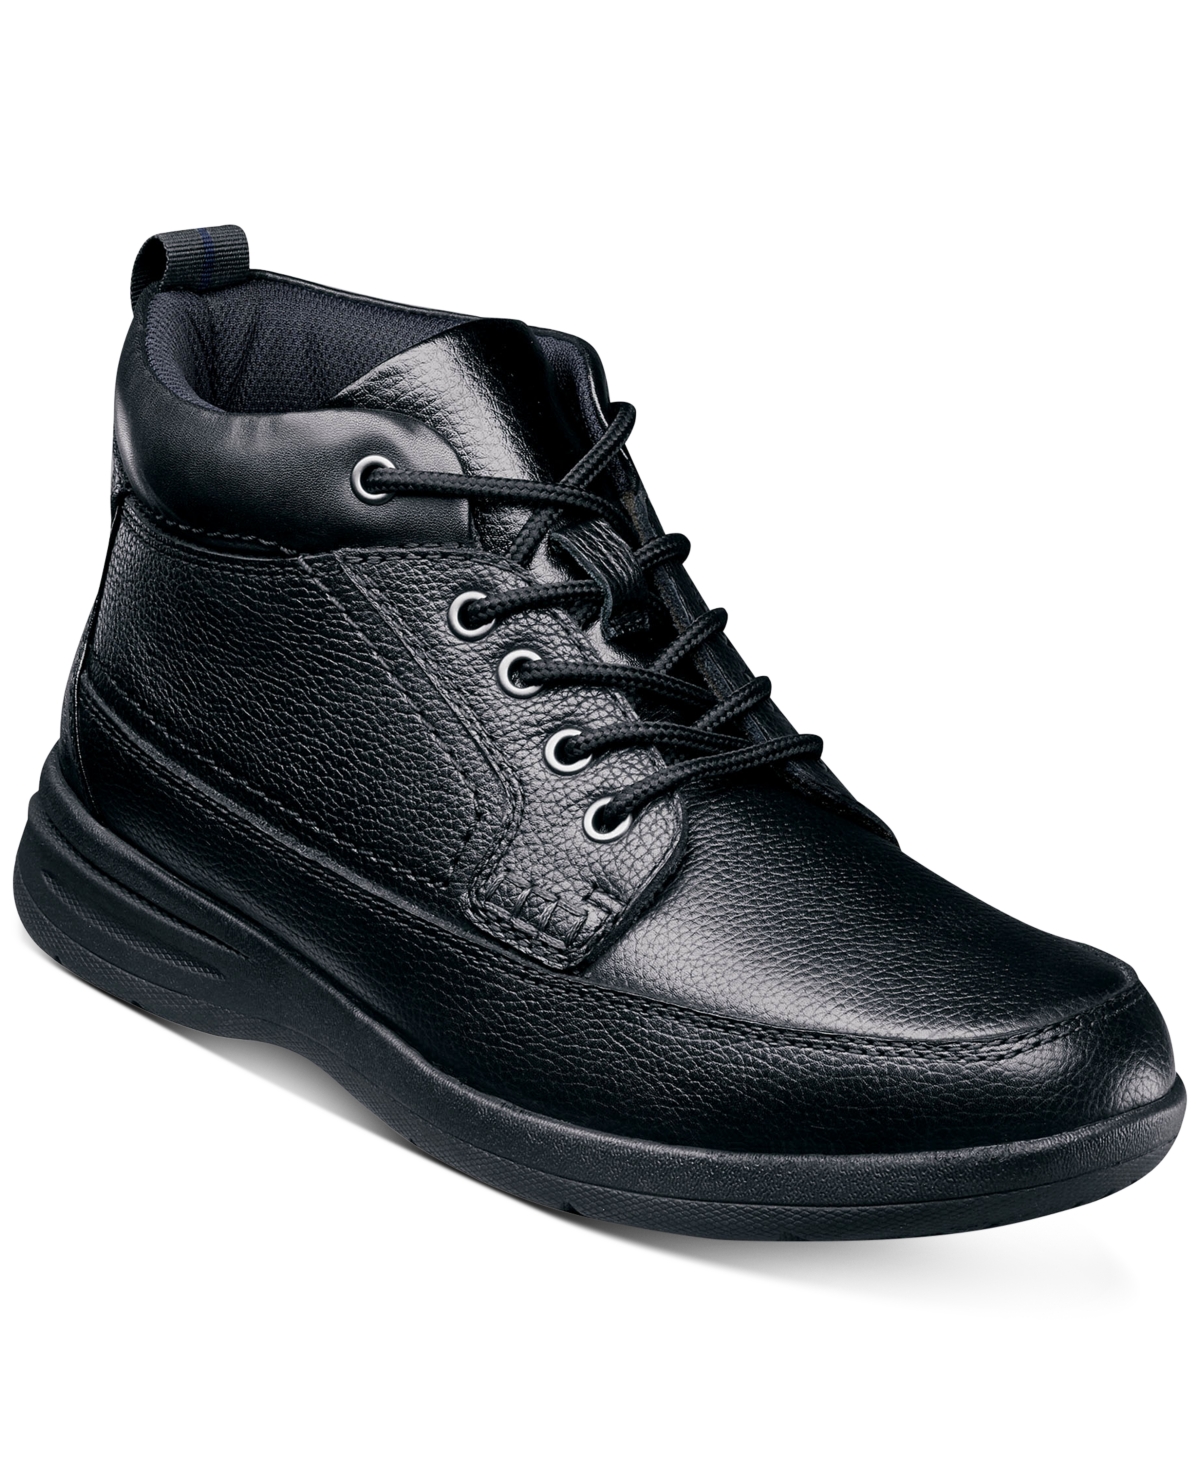 Men's Cam Chukka Boots - Black